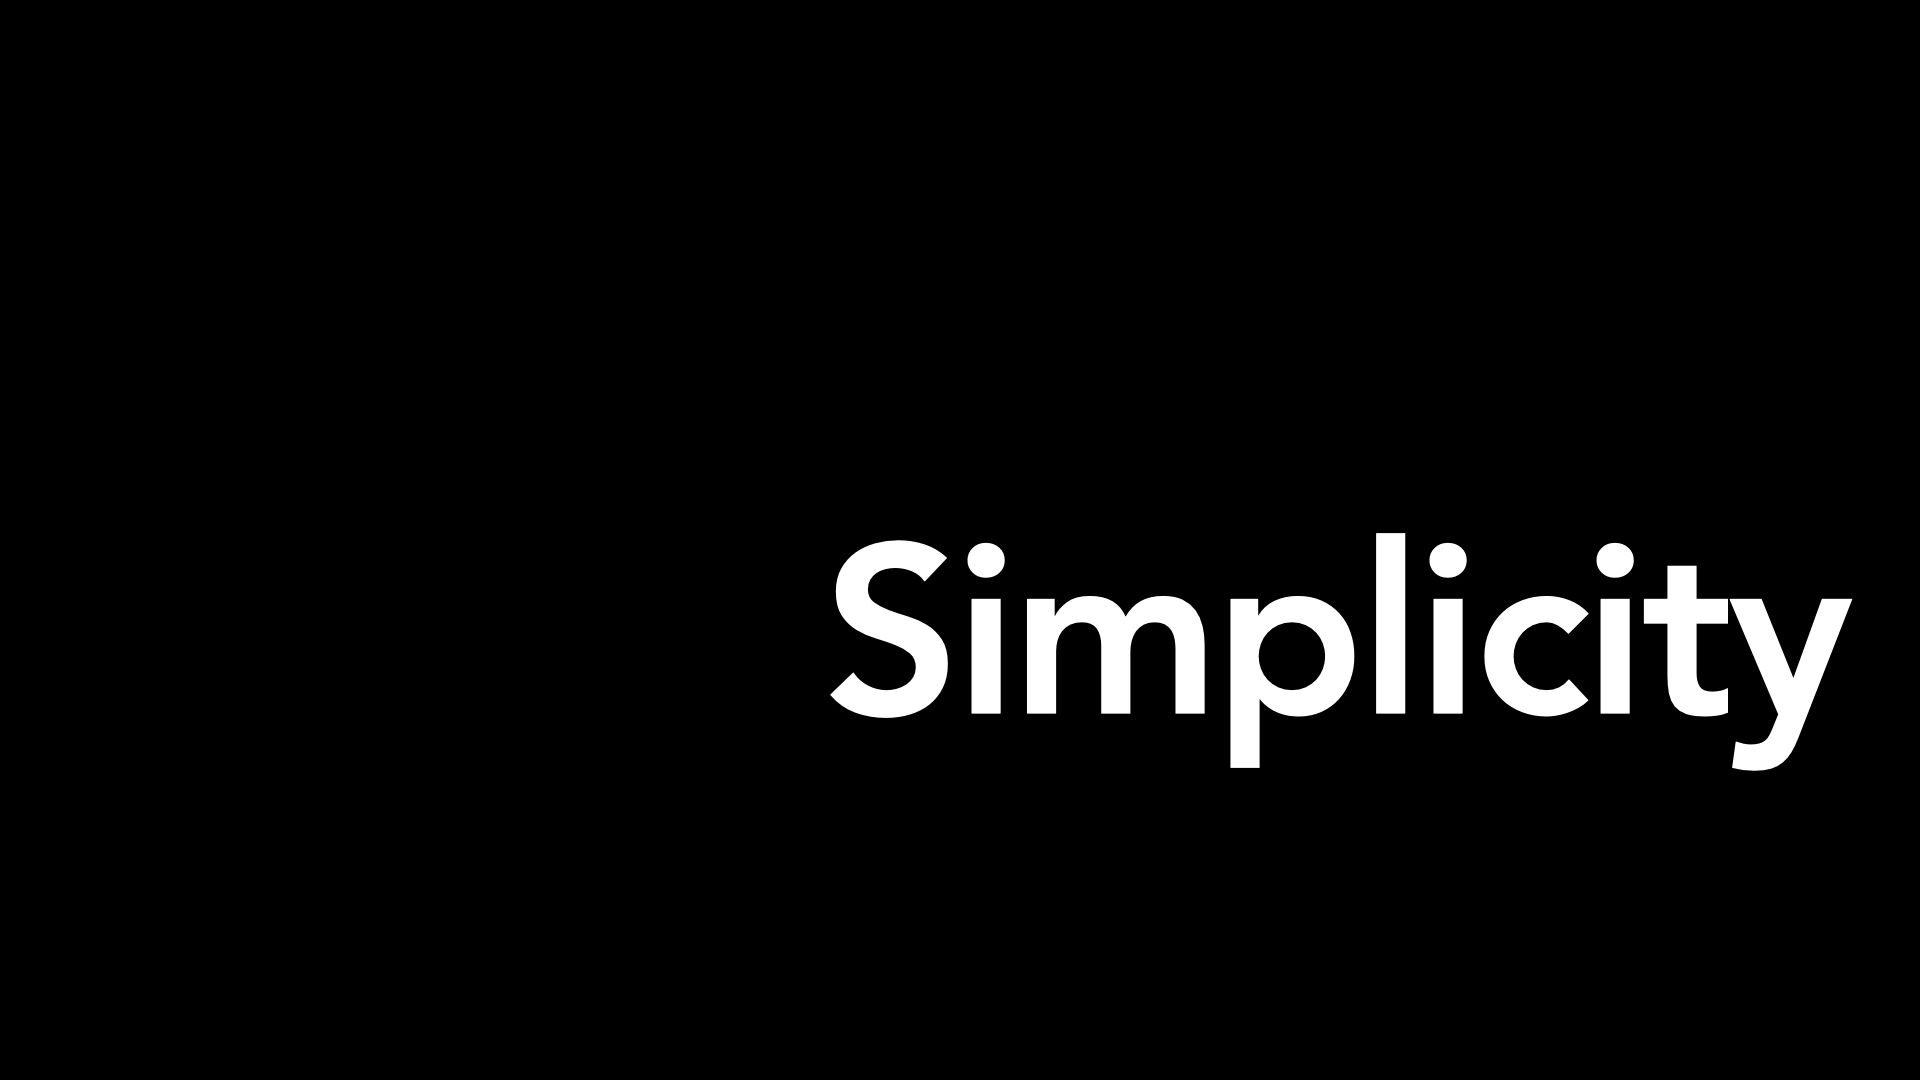 Slide text "Simplicity" on plain background